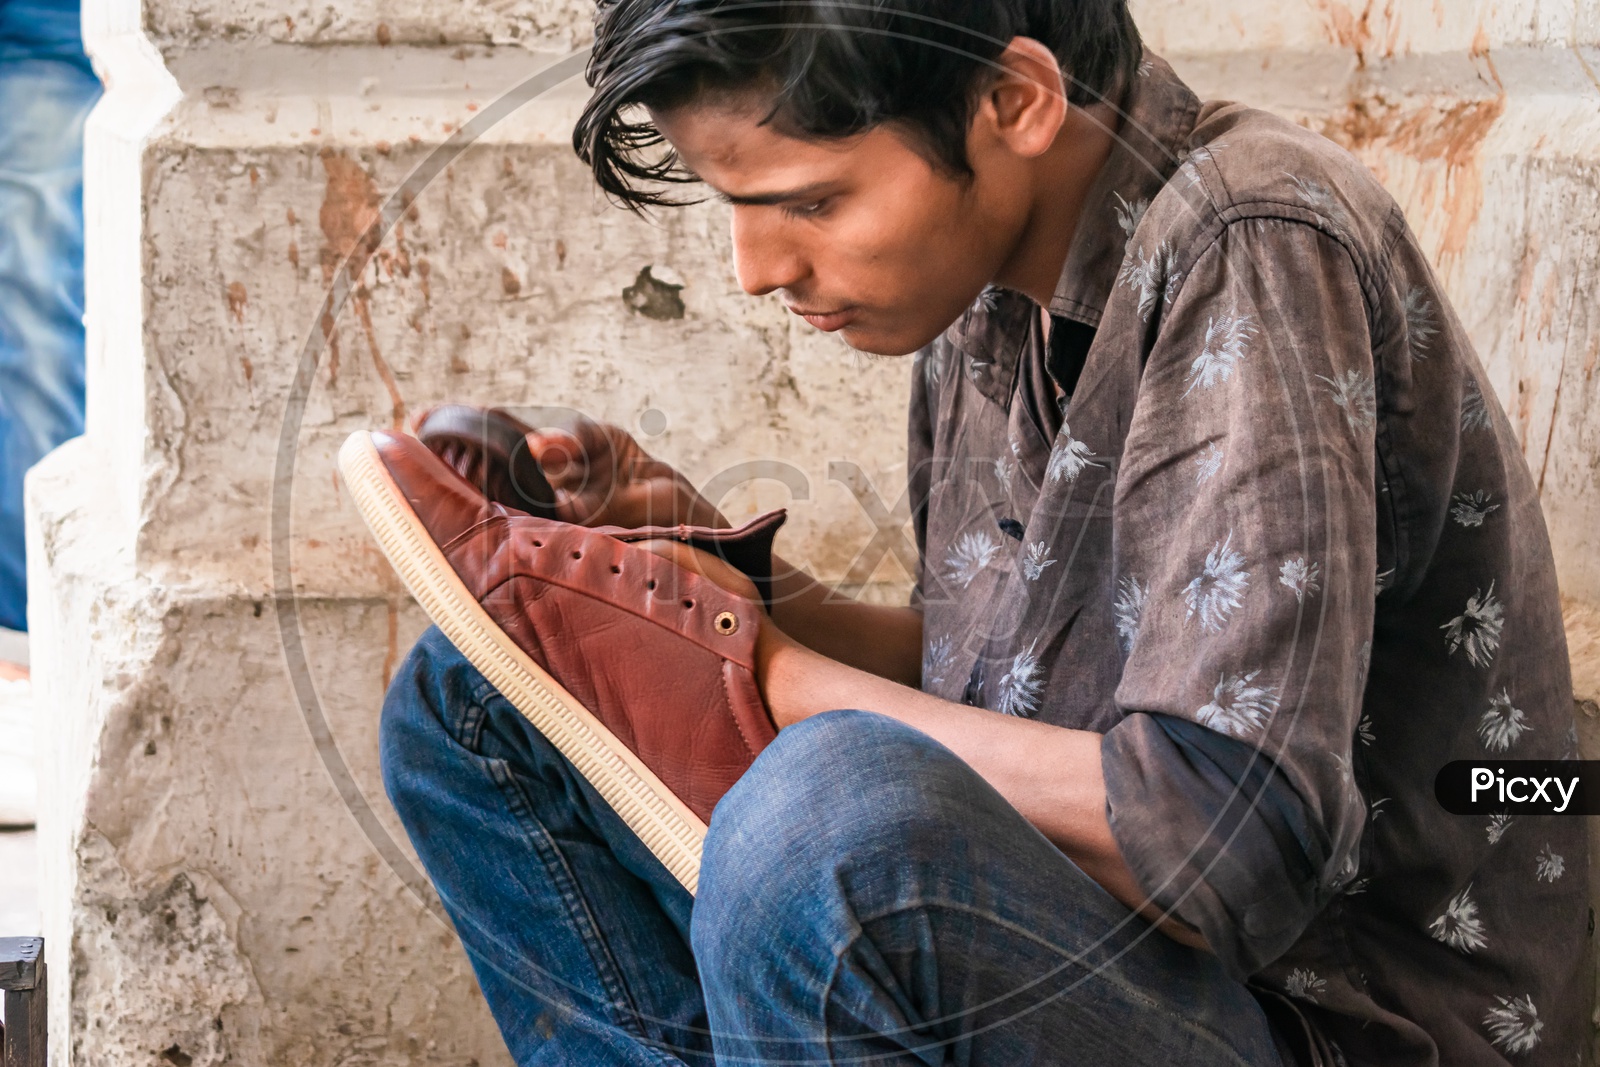 Cobbler(Mochi) applying shoe polish on shoes